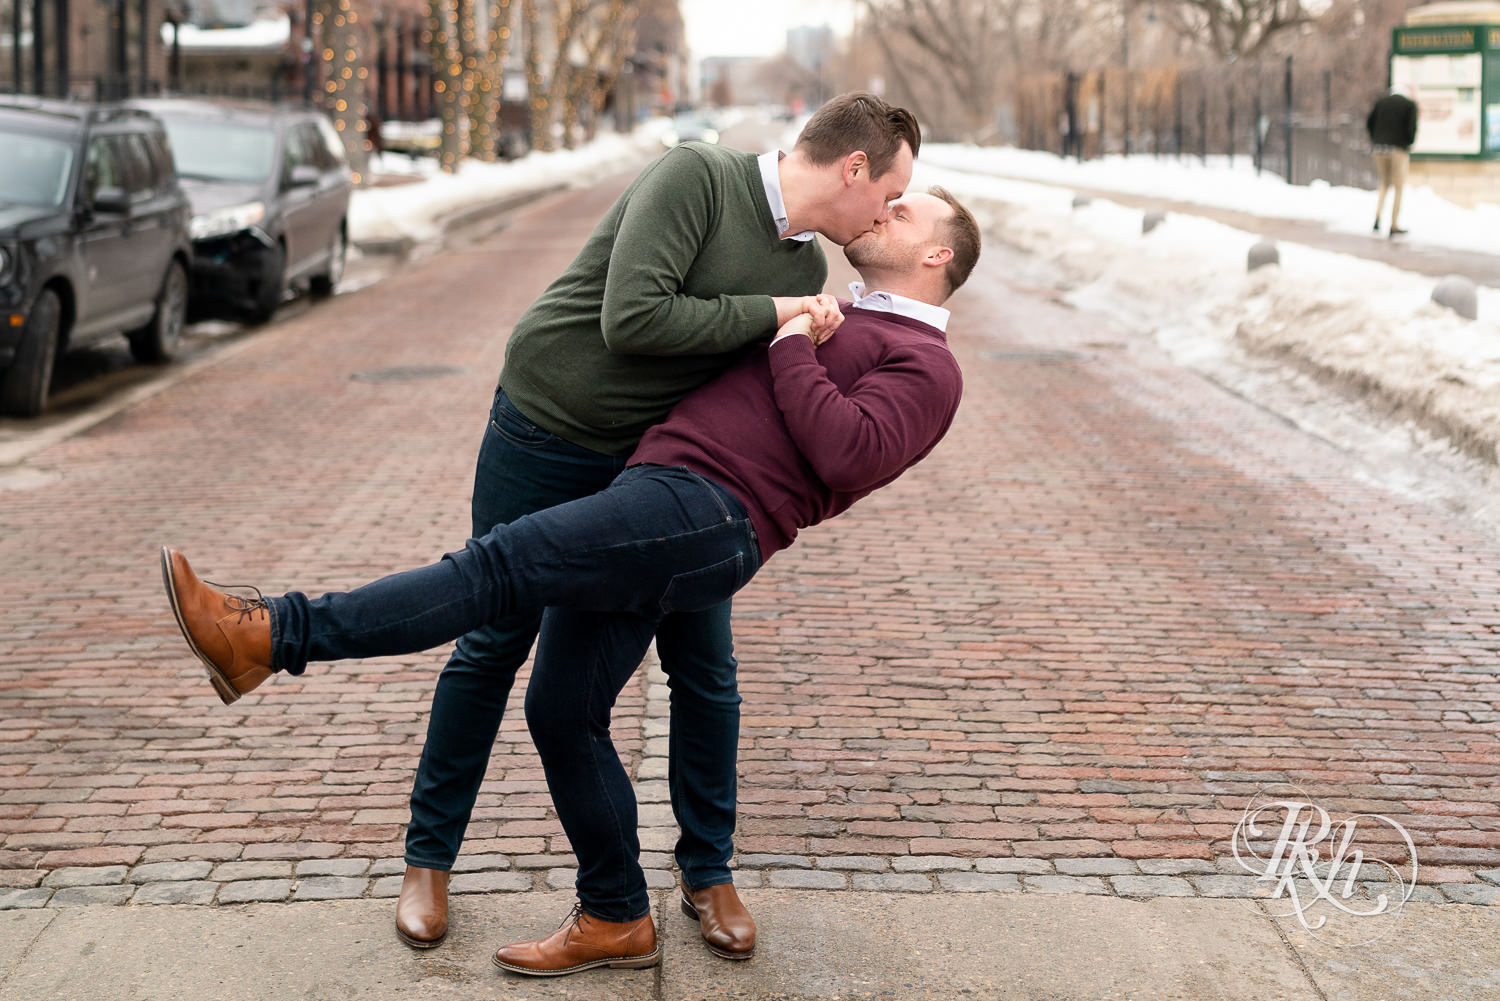 Gay men kiss on cobblestone street during the winter in Minneapolis, Minnesota.